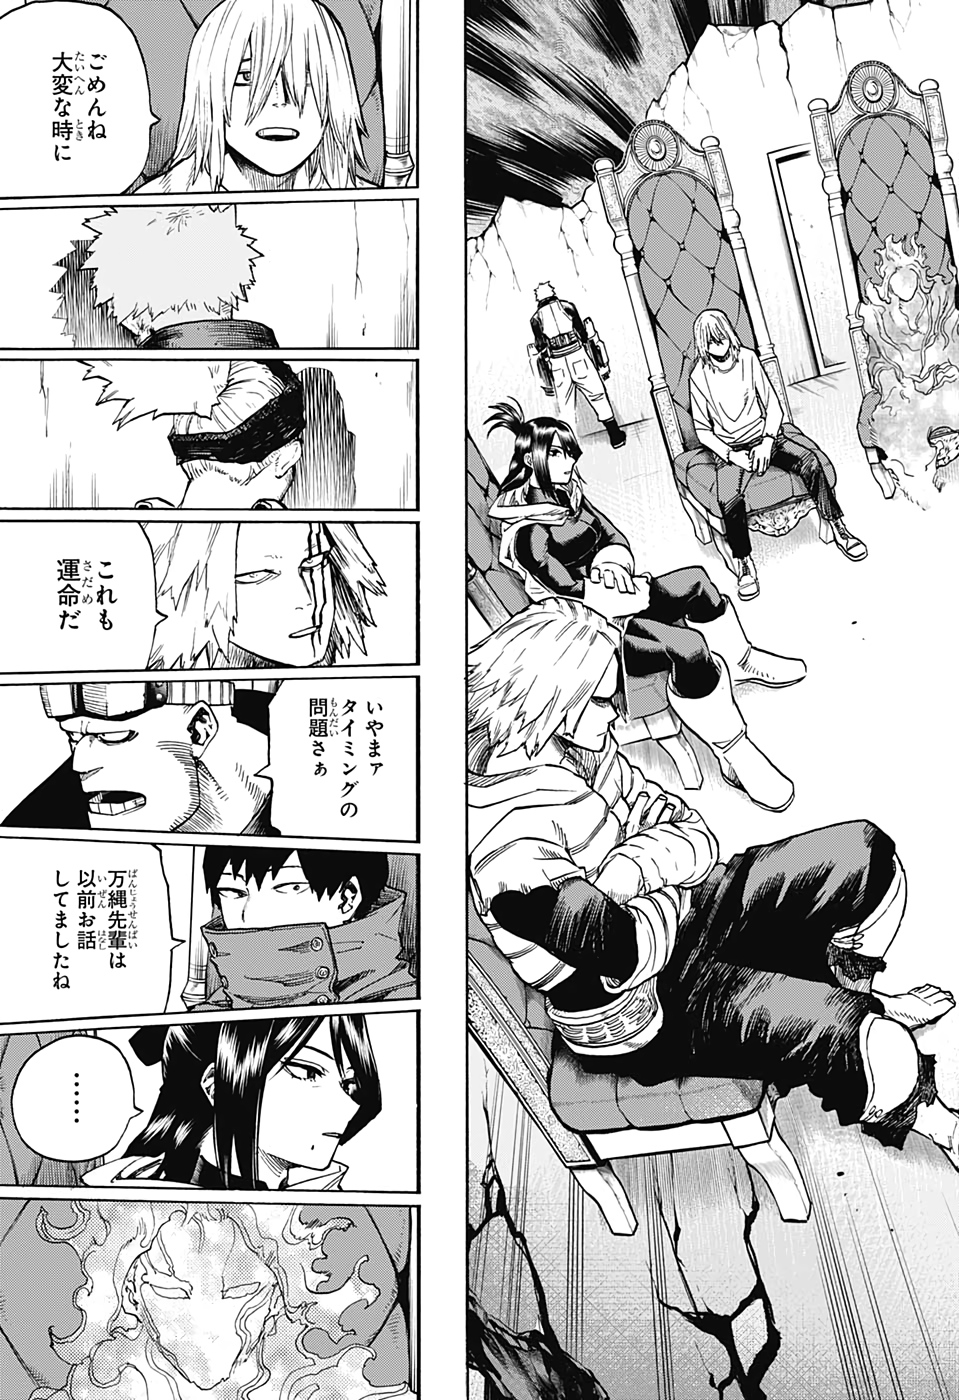 Boku no Hero Academia - Chapter 304 - Page 3